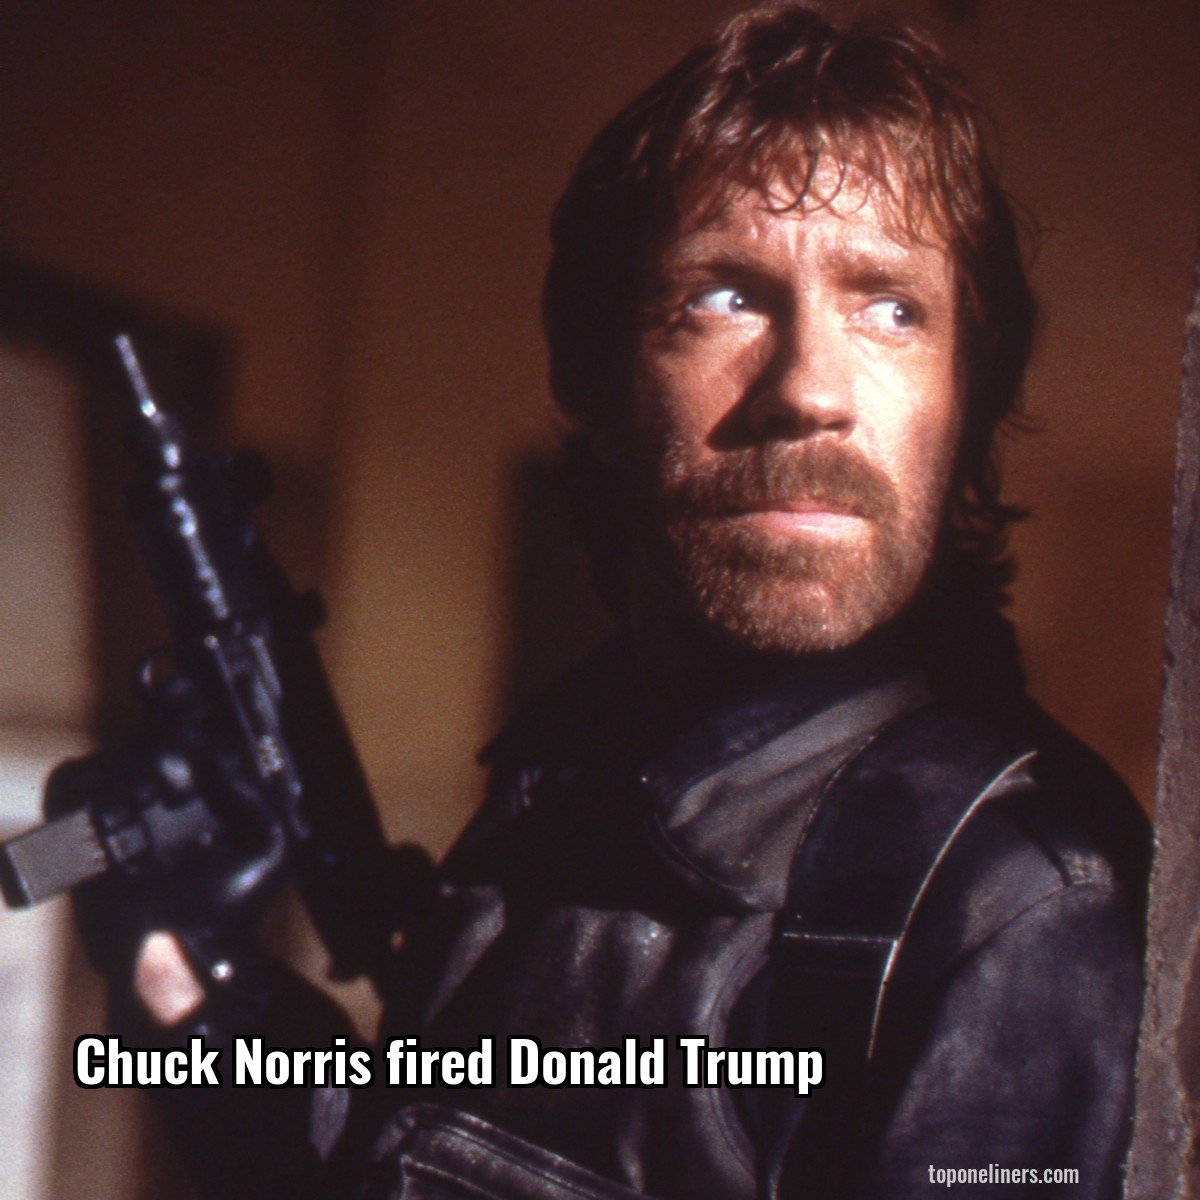 Chuck Norris fired Donald Trump